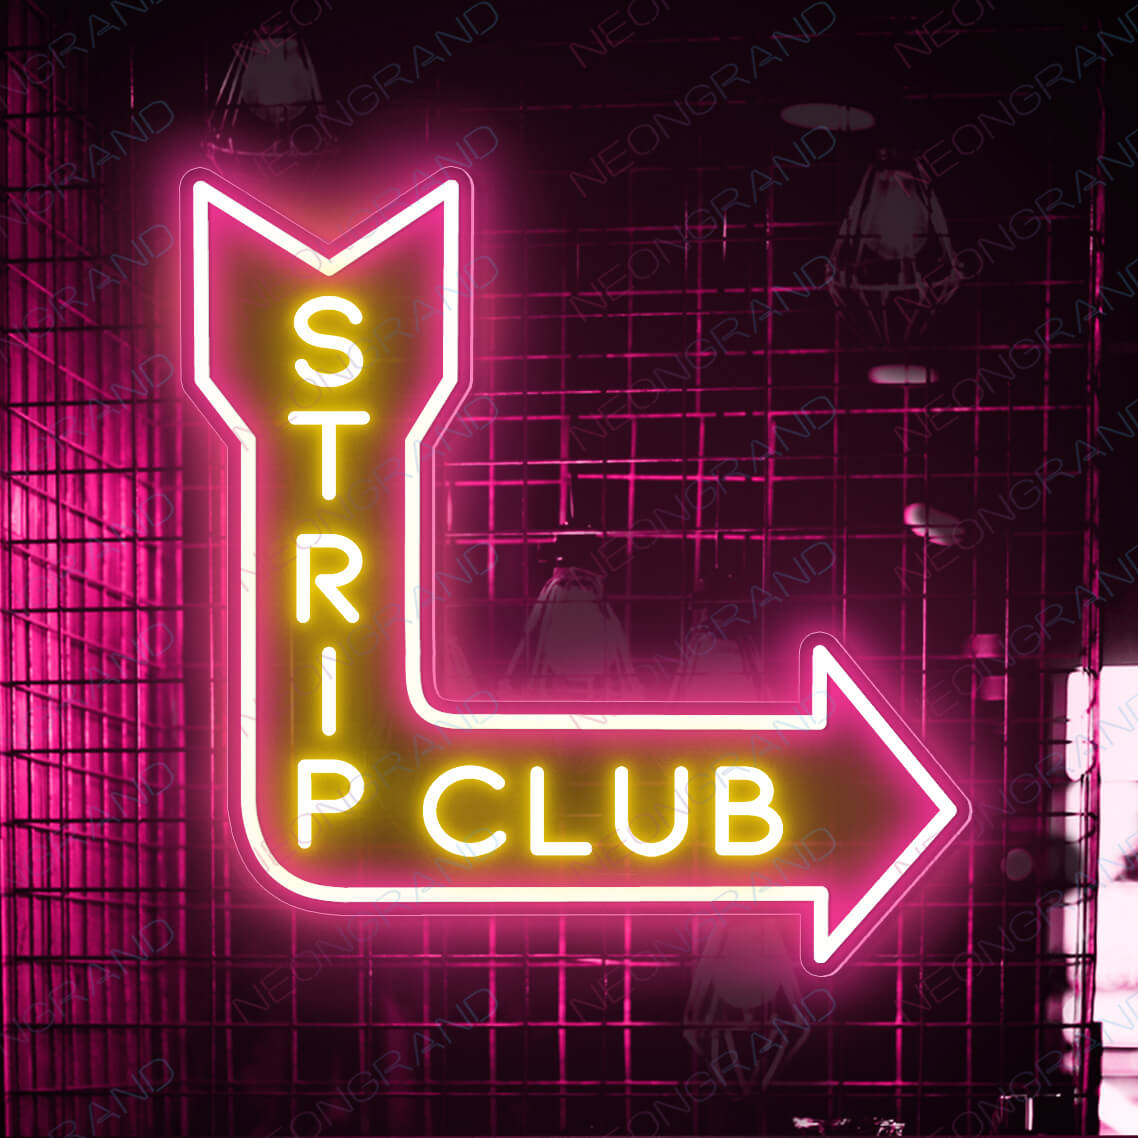 Strip Club Neon Sign Bar Led Light yellow